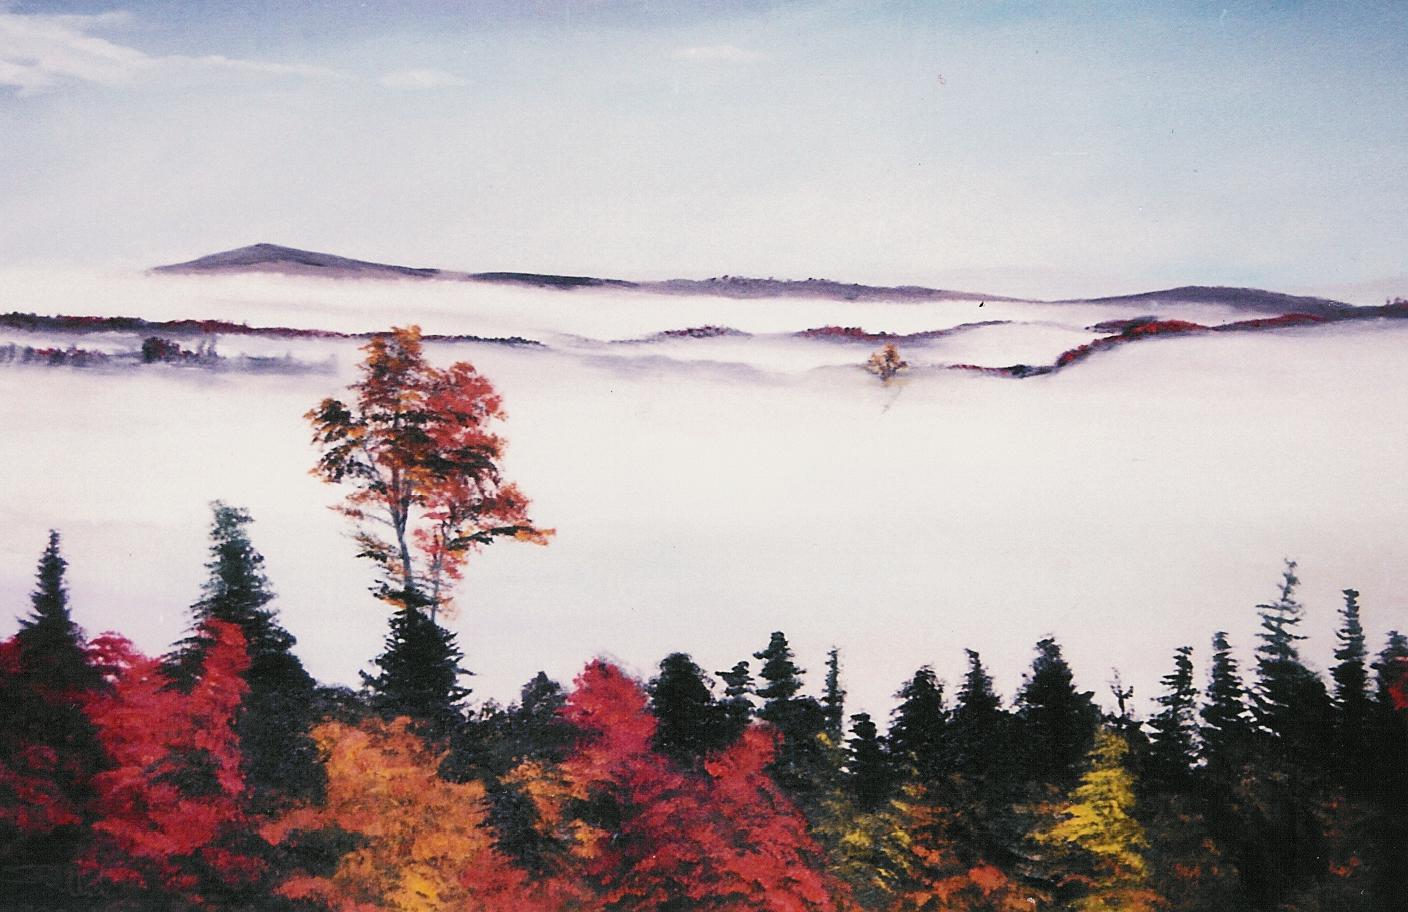 Autumn scene, trees and fog over Union River